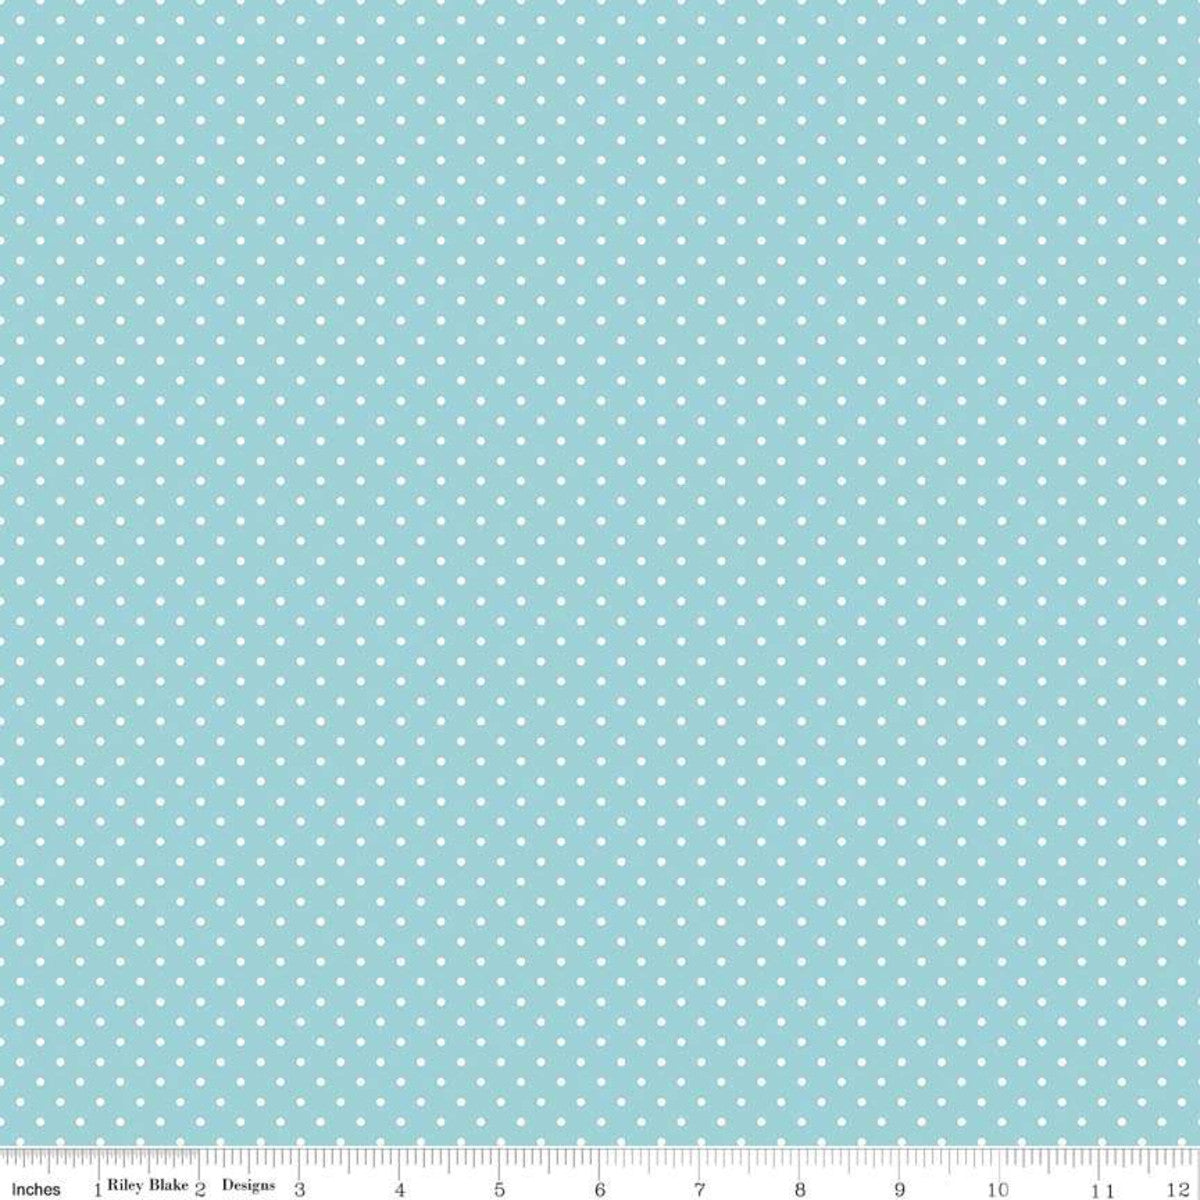 White Swiss (Polka) Dots - Aqua Background Fabric, 100% Cotton, Ref. C670-20 AQUA , Swiss Dots Collection by Riley Blake Designs®